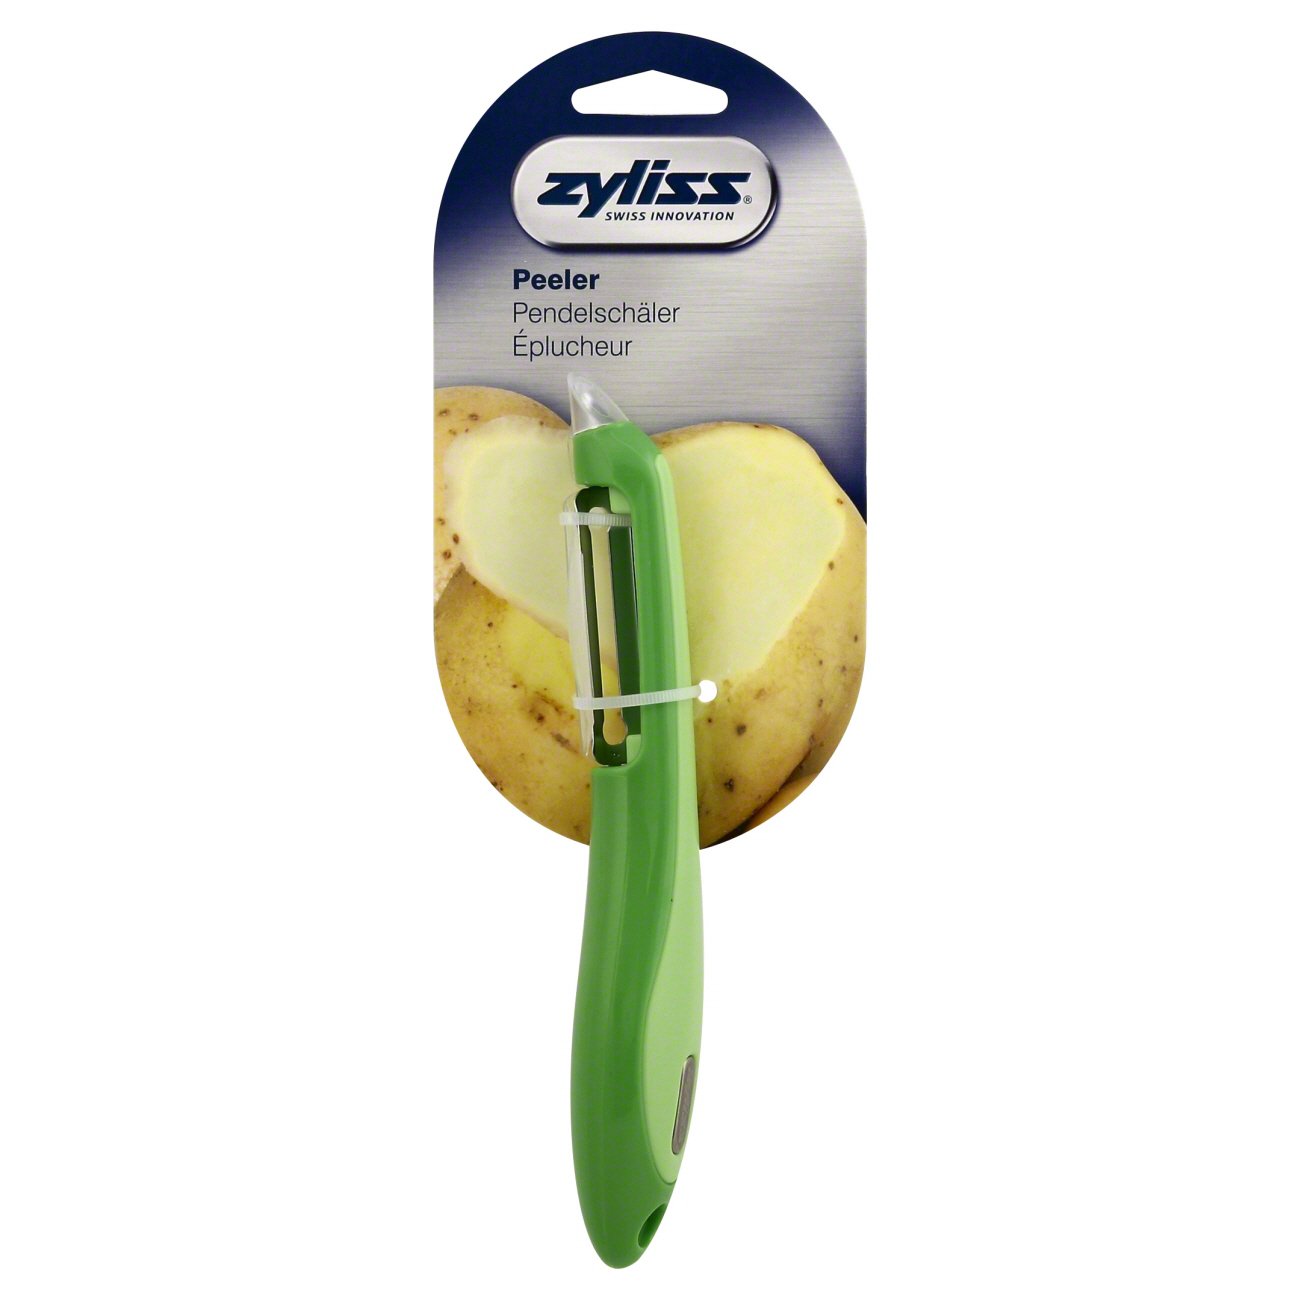 zyliss fruit peeler